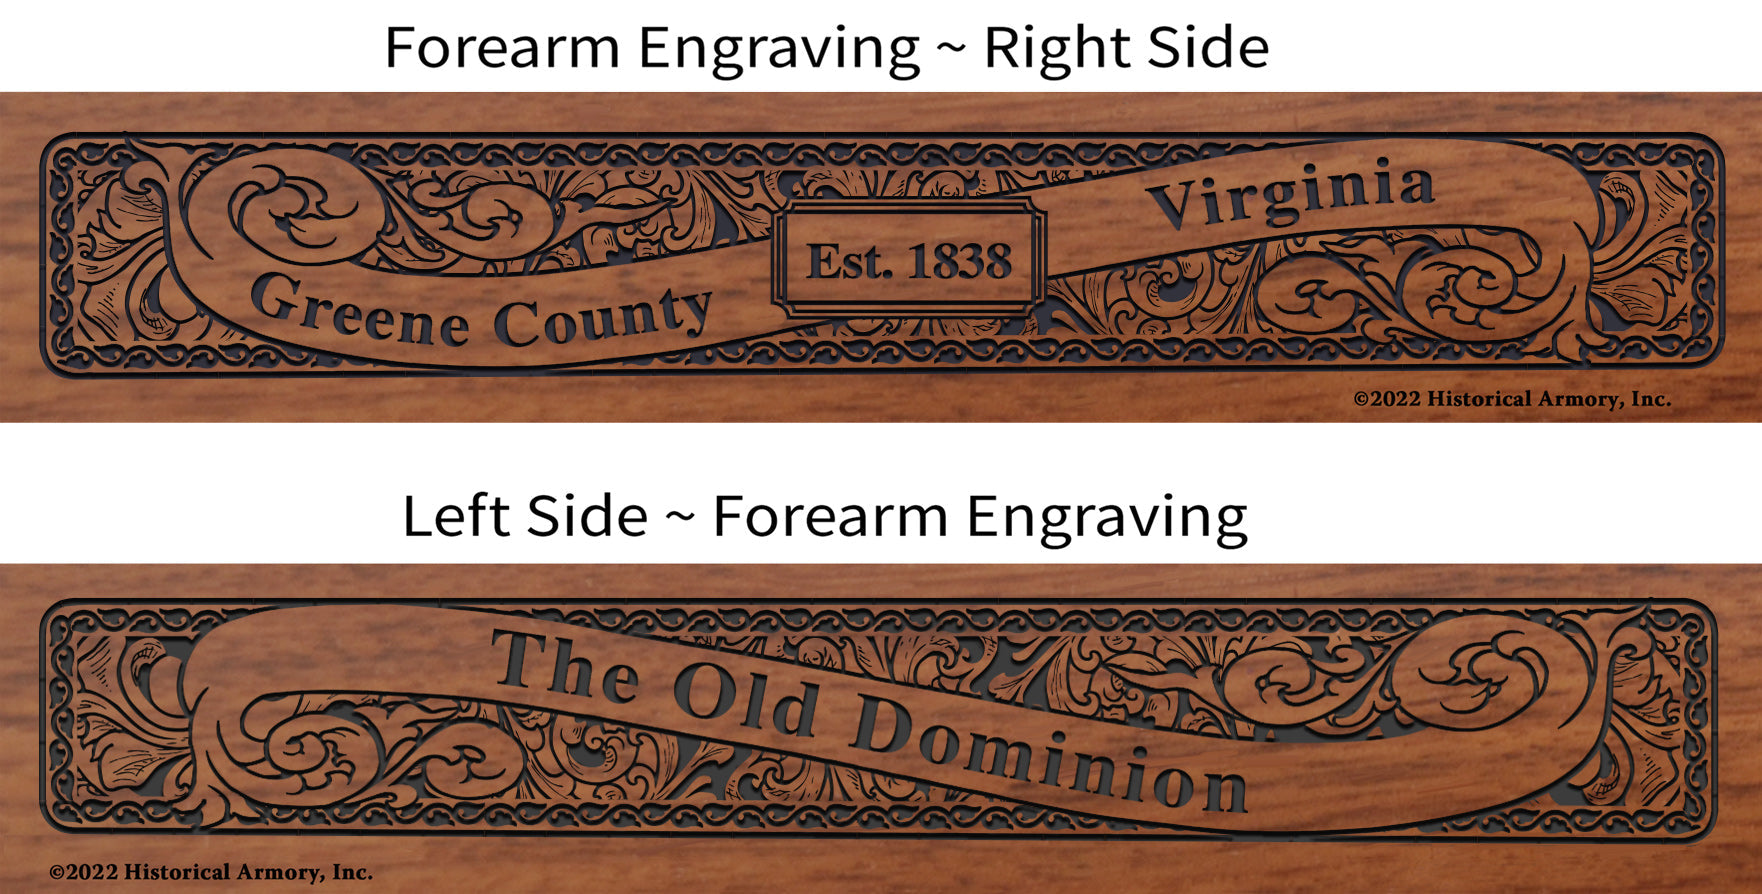 Greene County Virginia Engraved Rifle Forearm